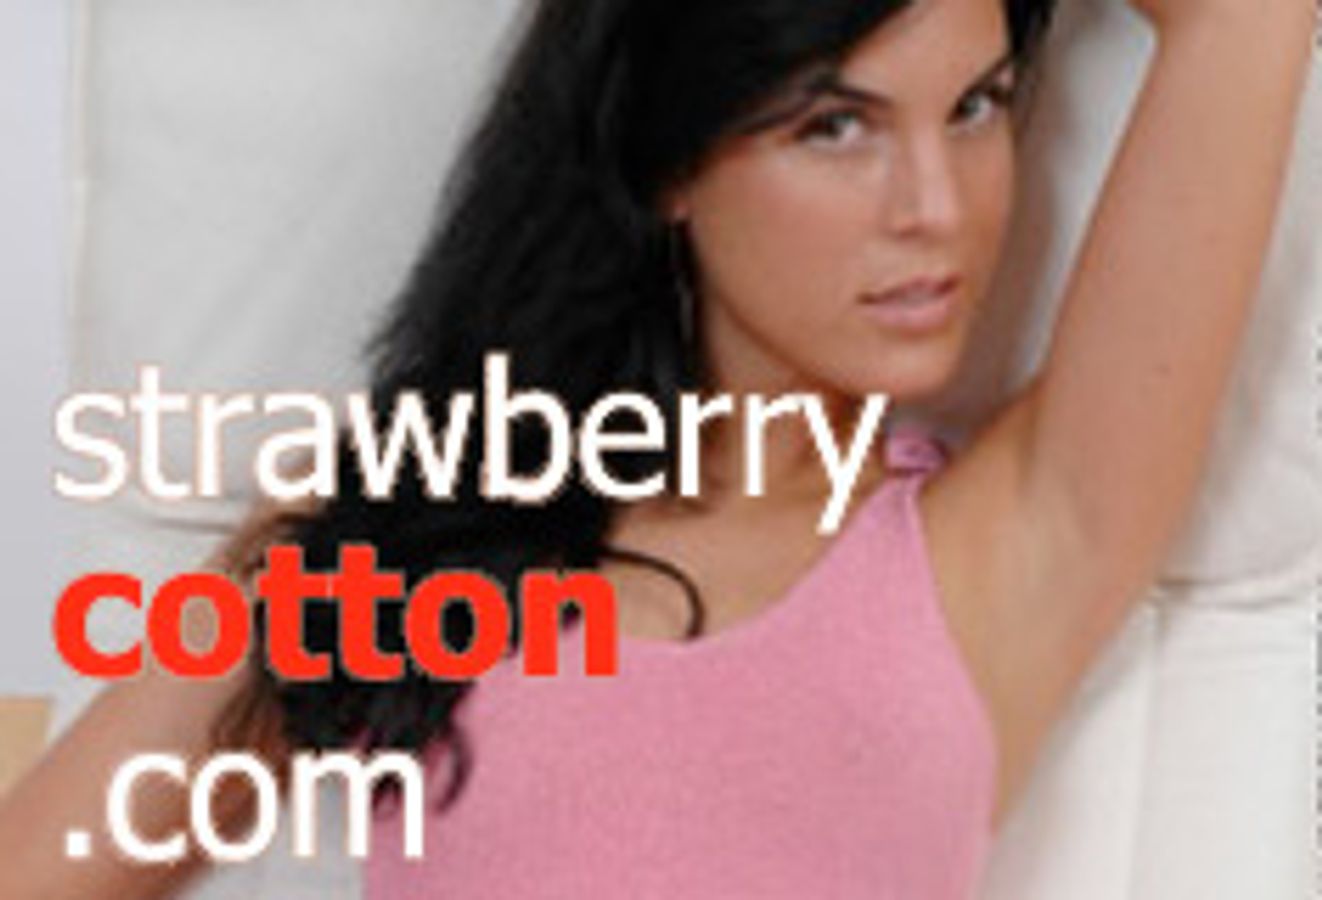 Strawberrycotton